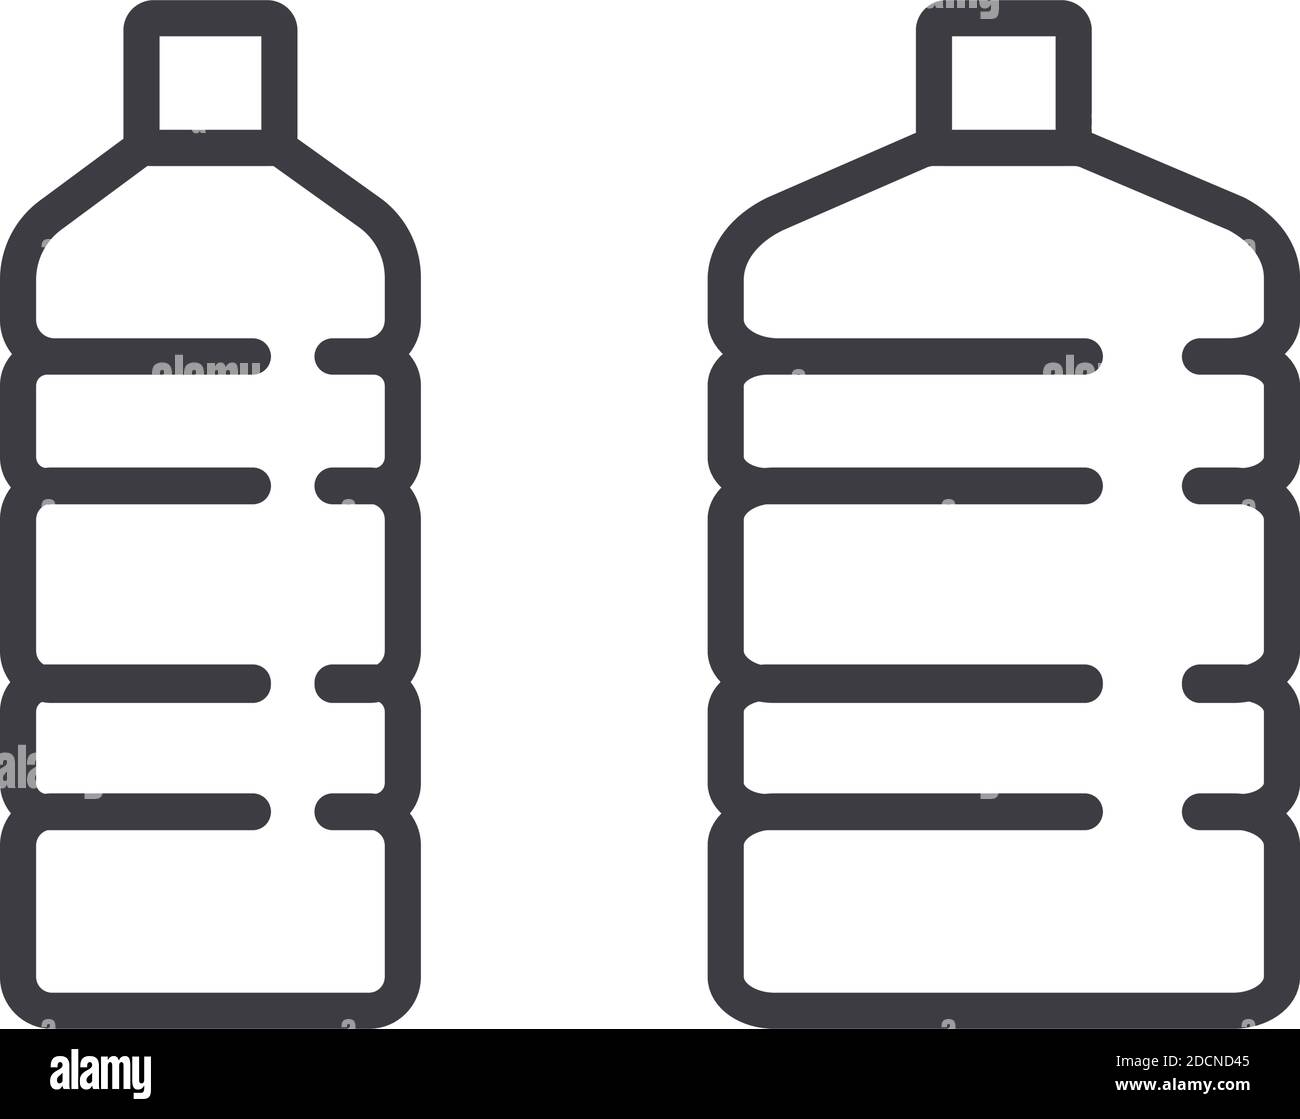 Plastic water bottle icon empty liquid container Vector Image